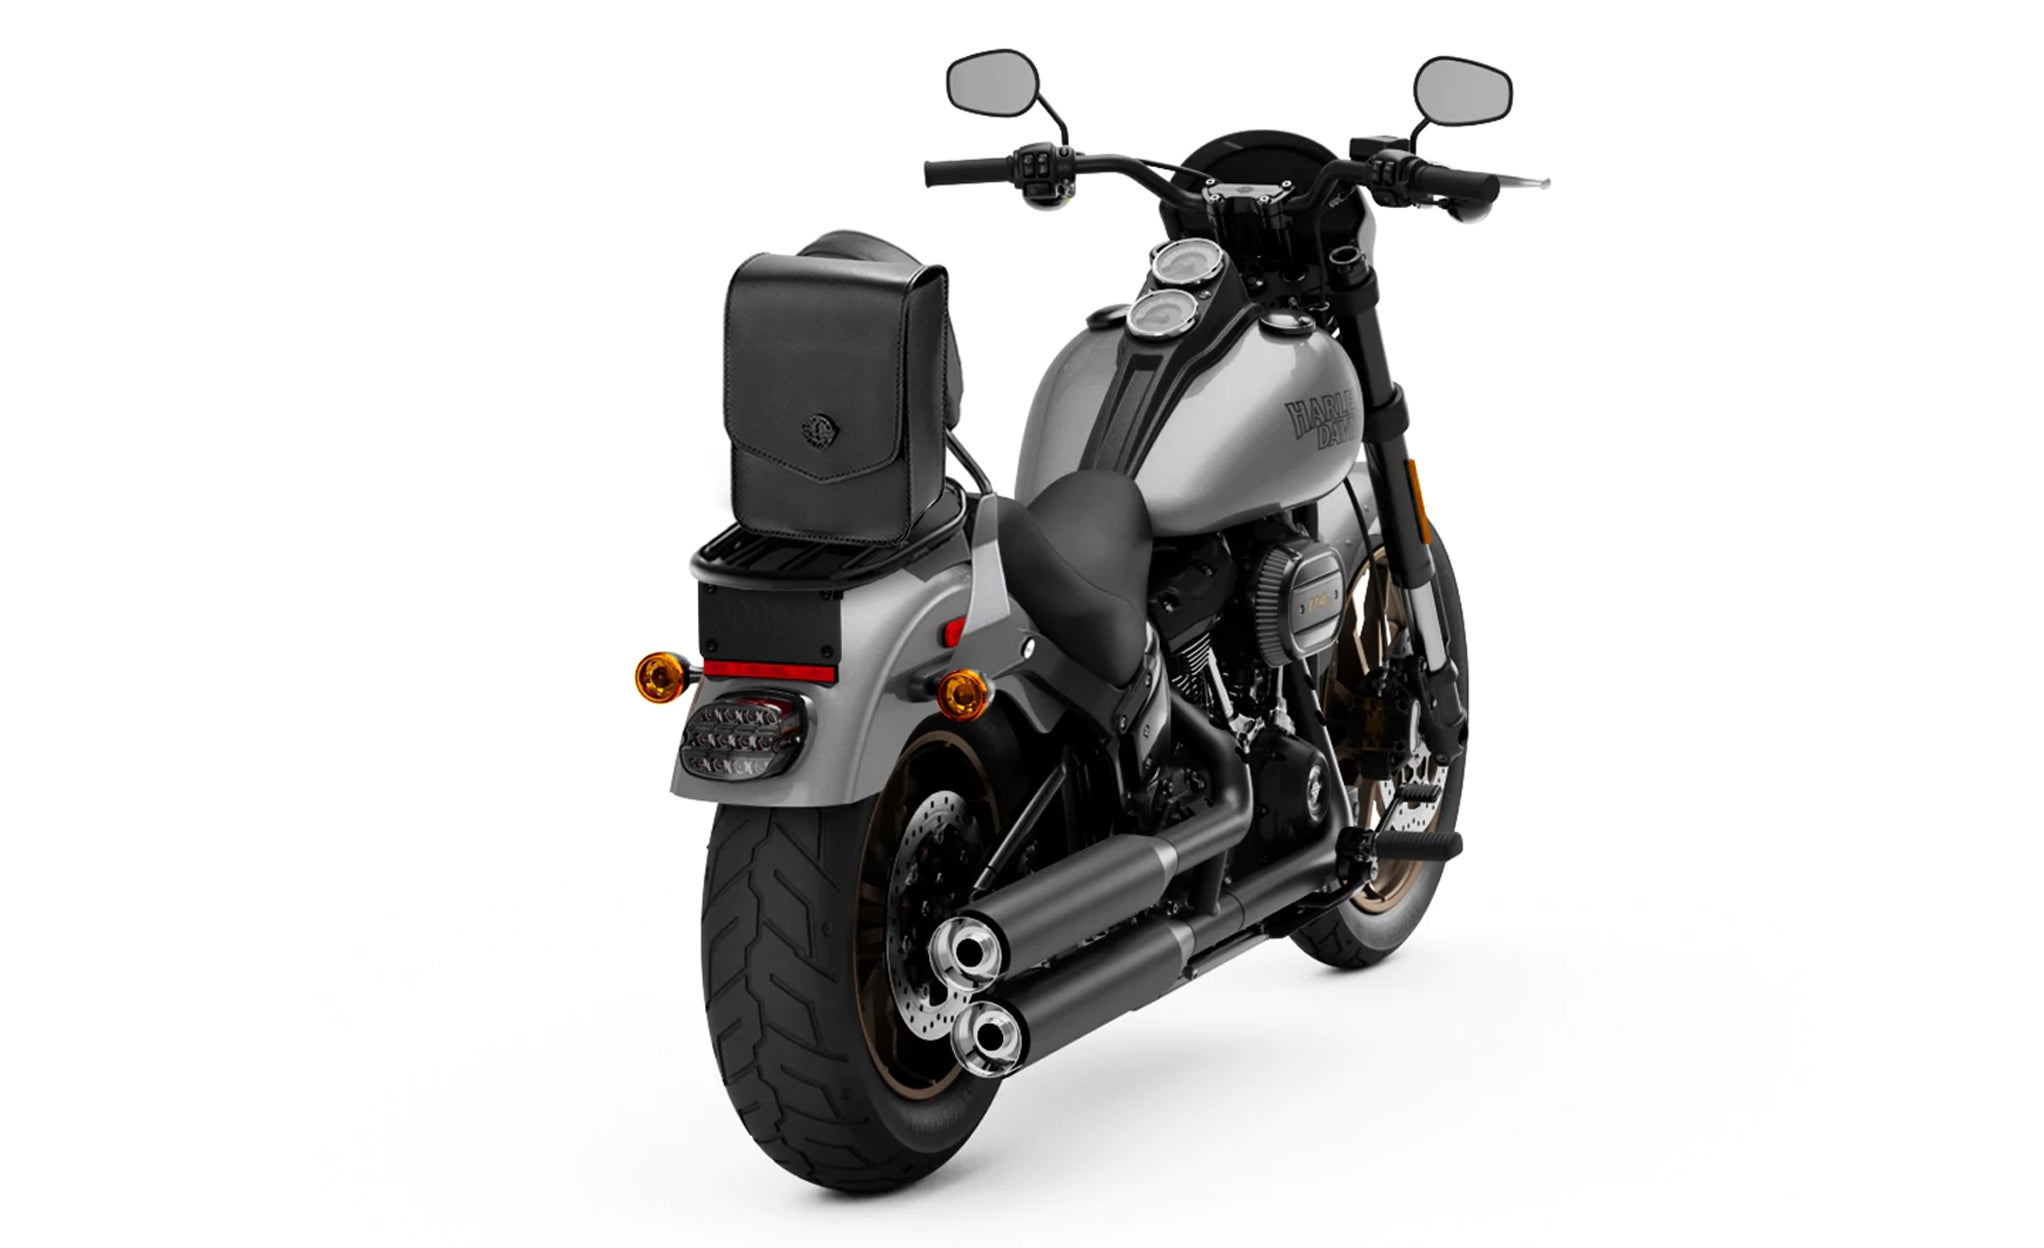 Viking Dark Age Small Suzuki Motorcycle Sissy Bar Bag Bag on Bike View @expand